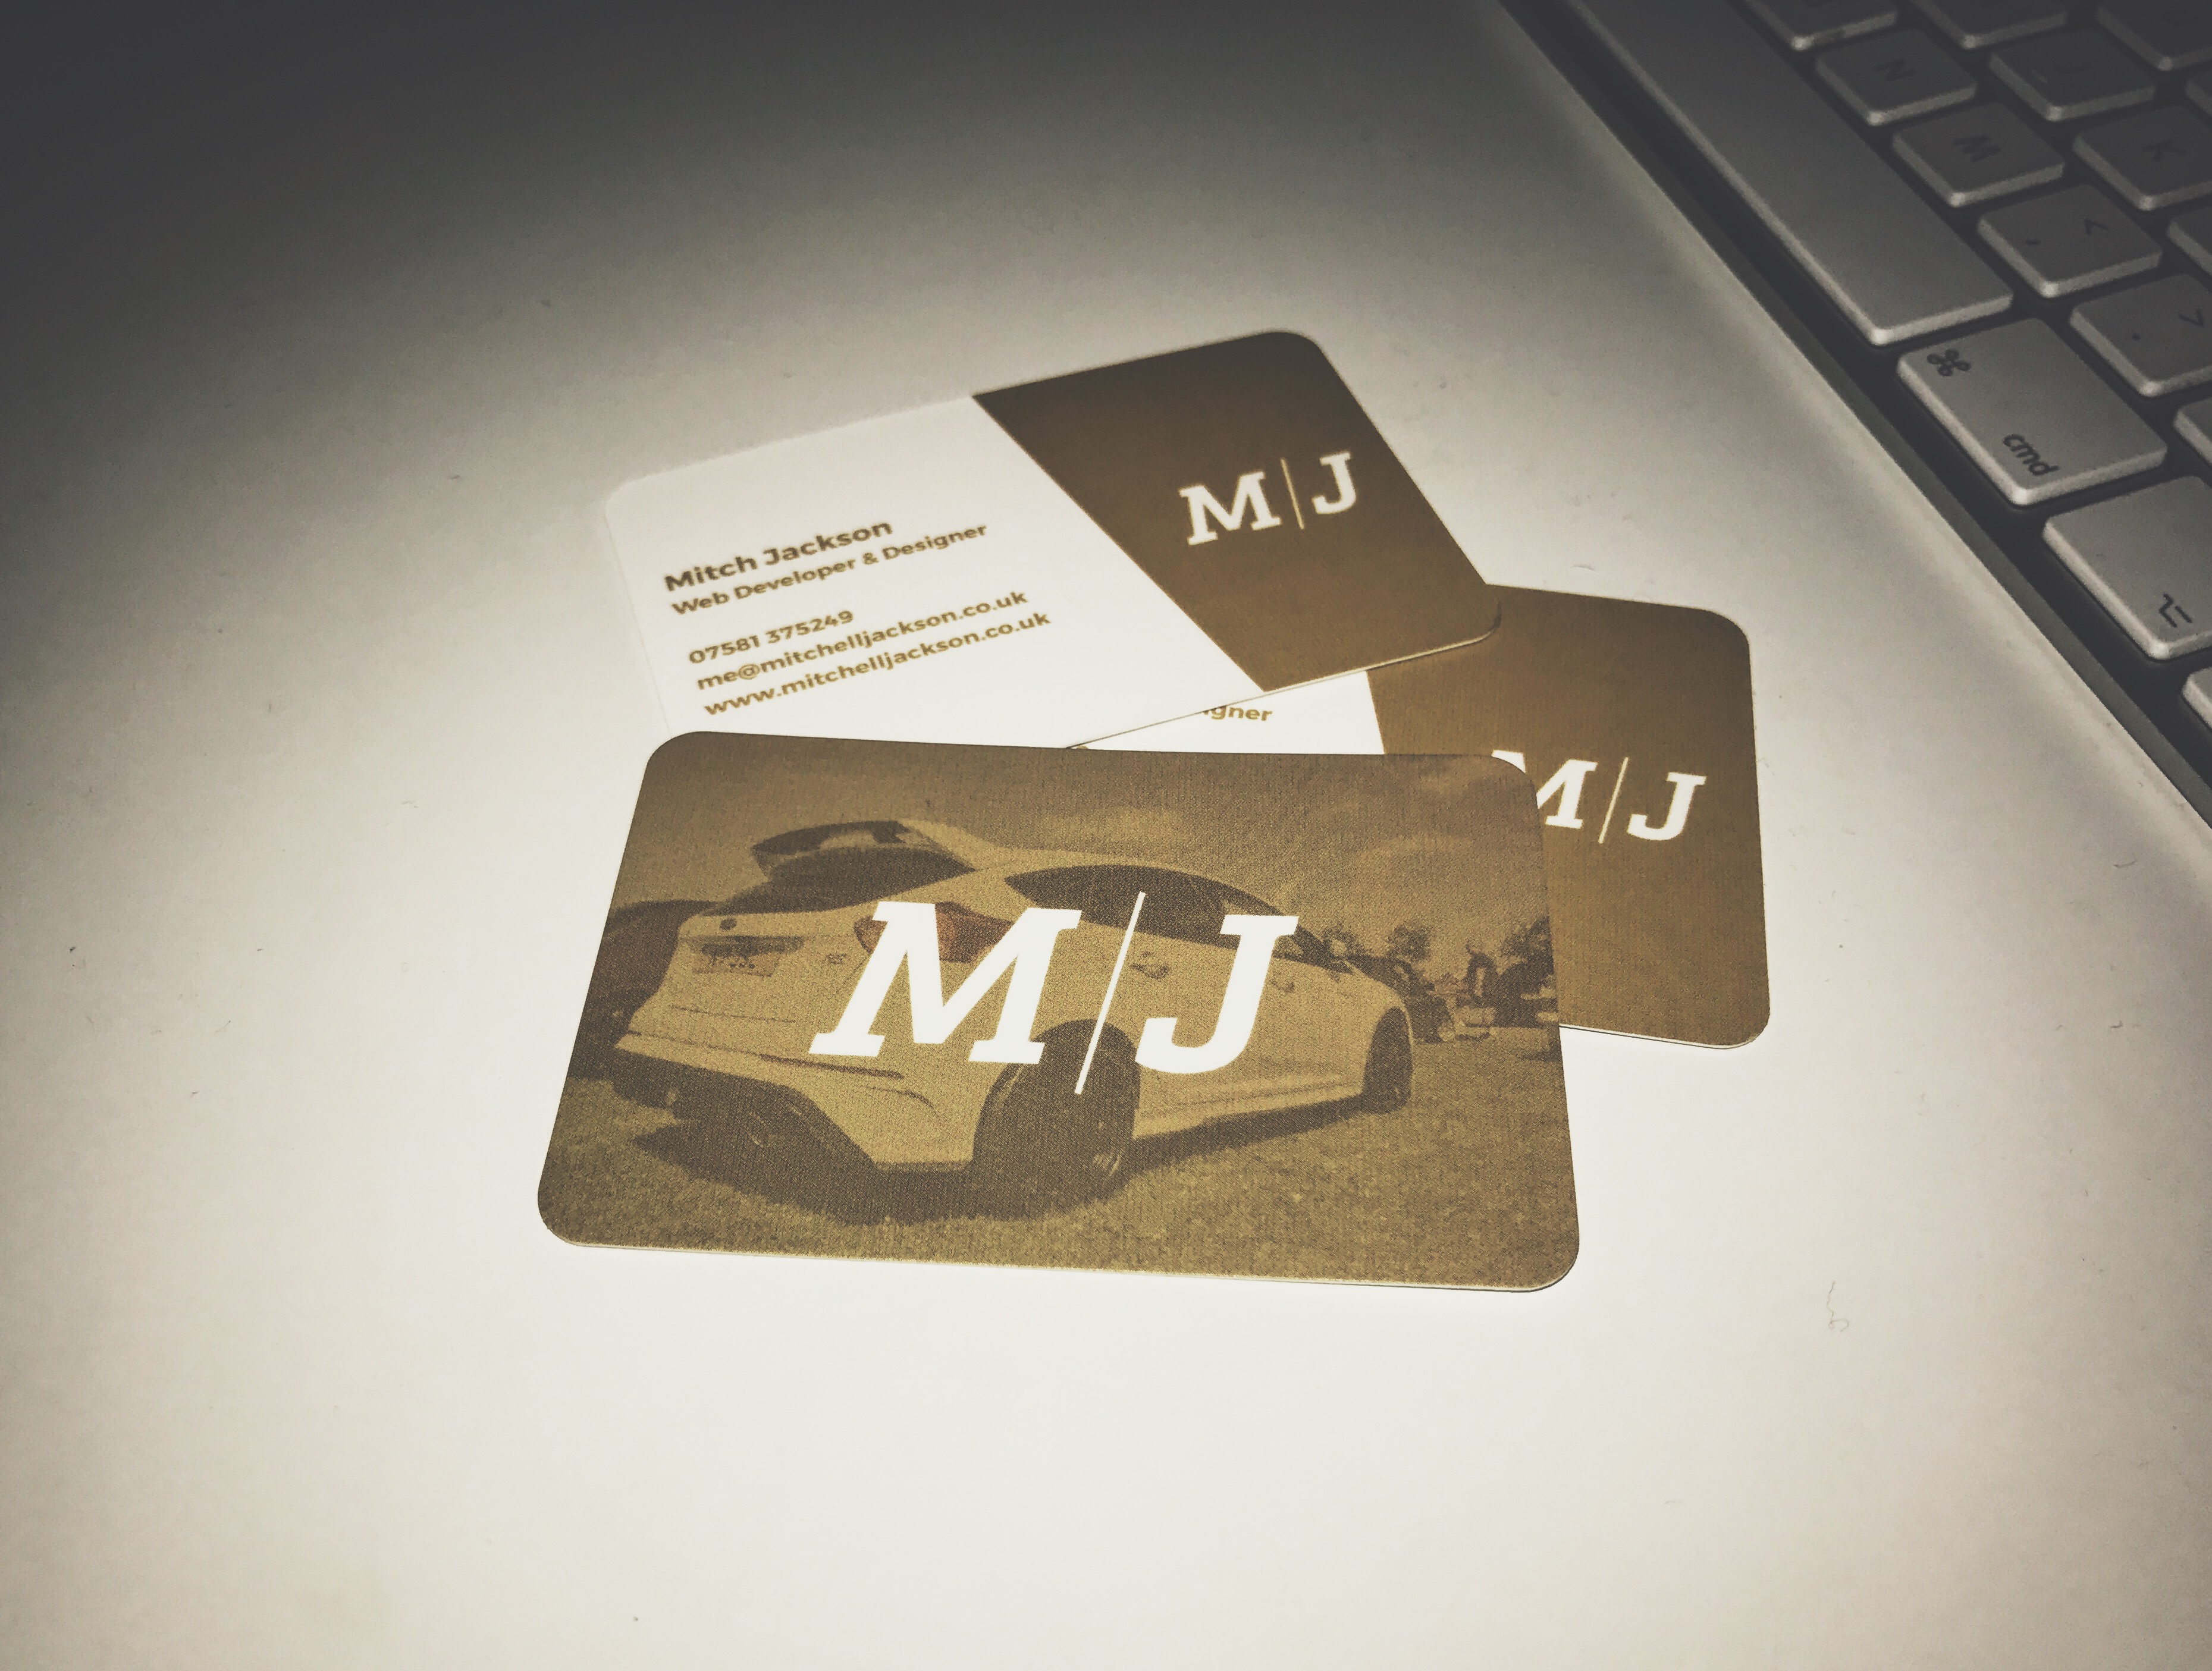 M/J business cards on white desk